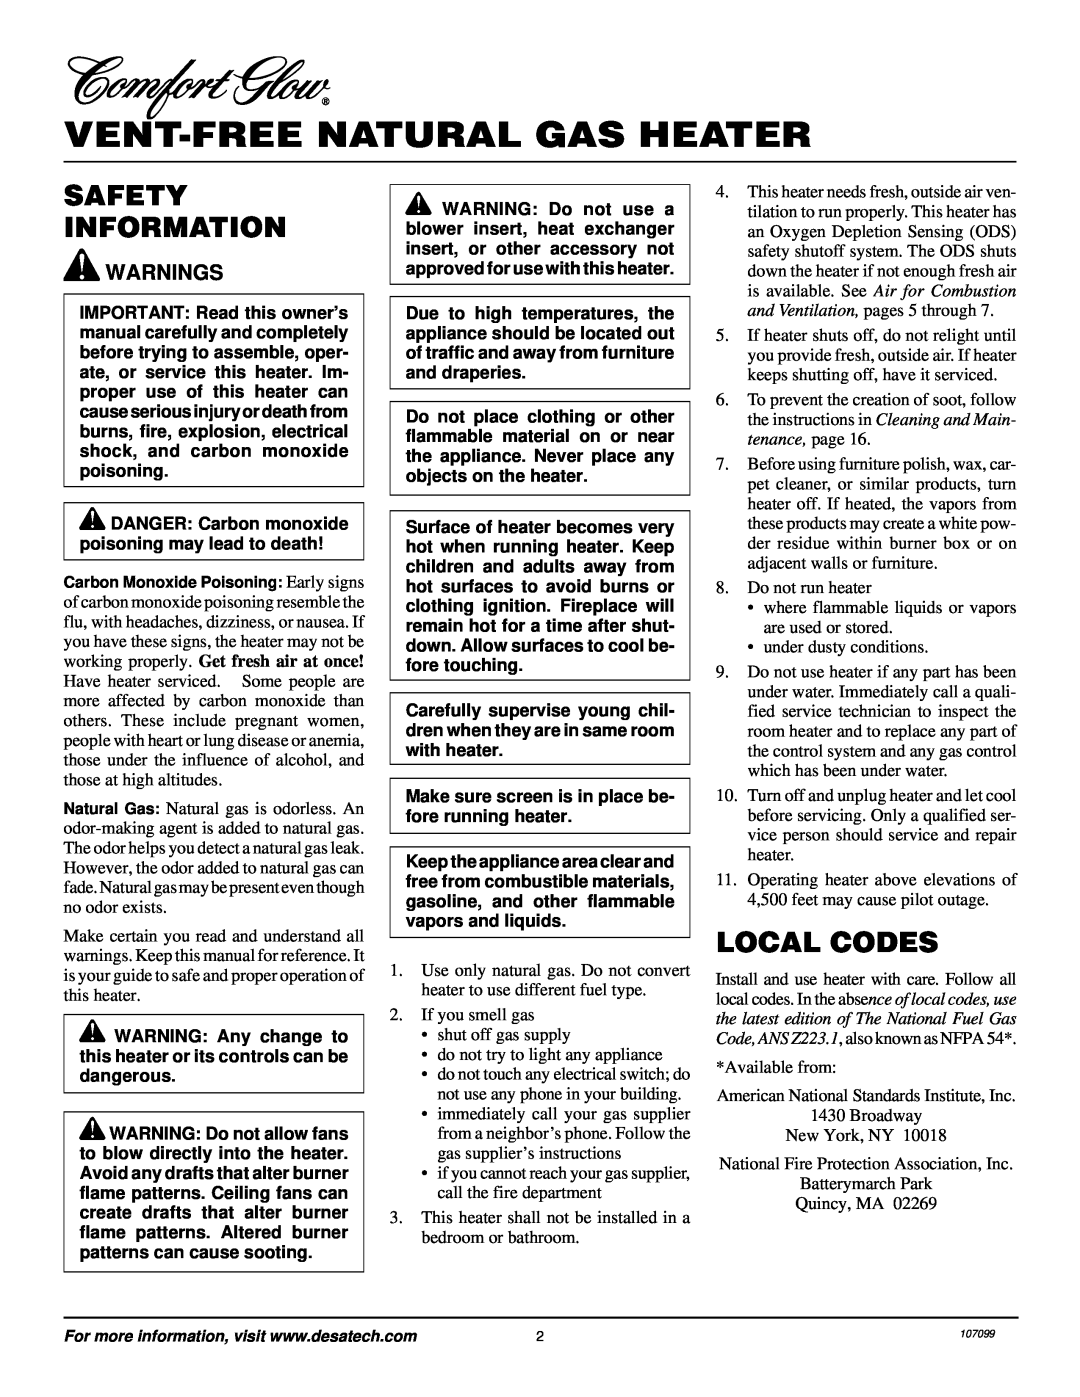 Desa RFN30TA installation manual Vent-Freenatural Gas Heater, Safety Information, Local Codes, Warnings 